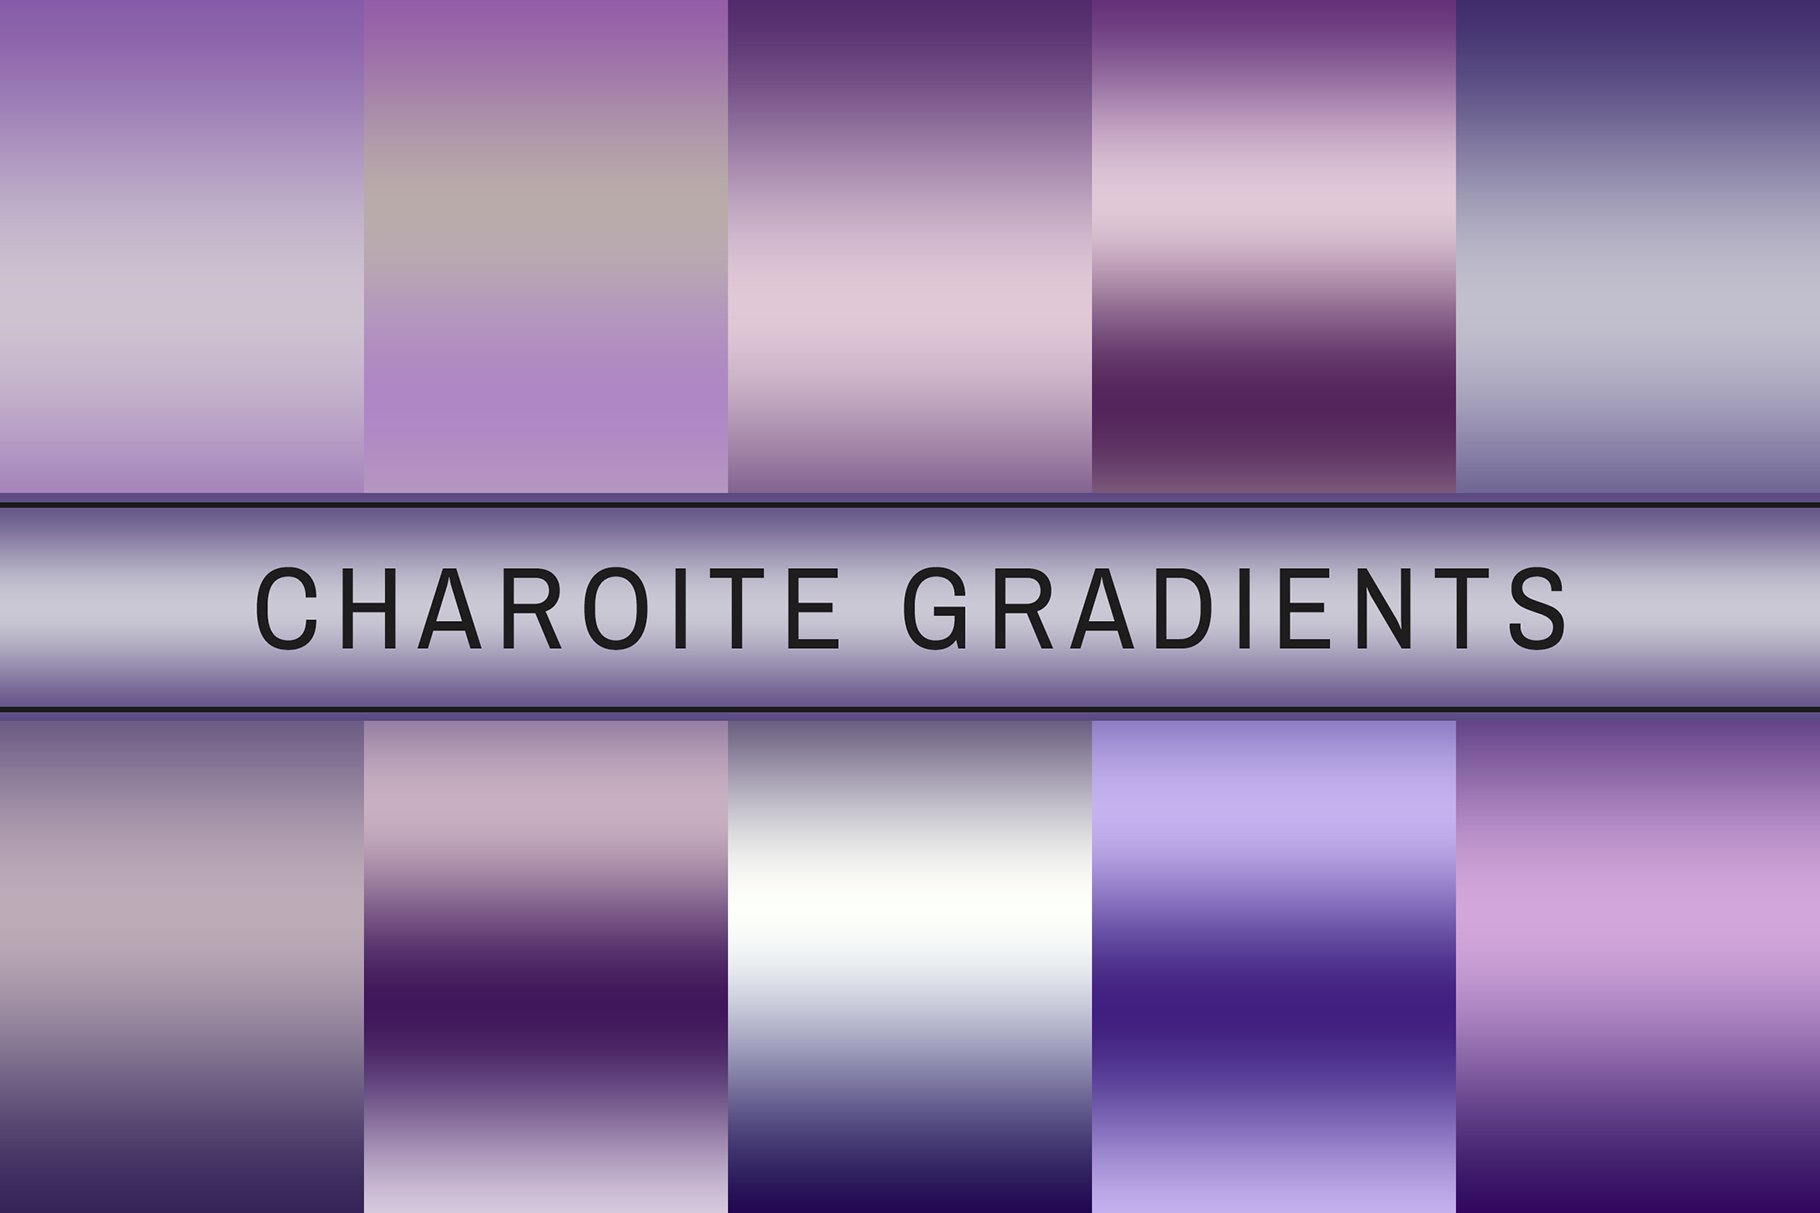 Charoite Gradients cover image.